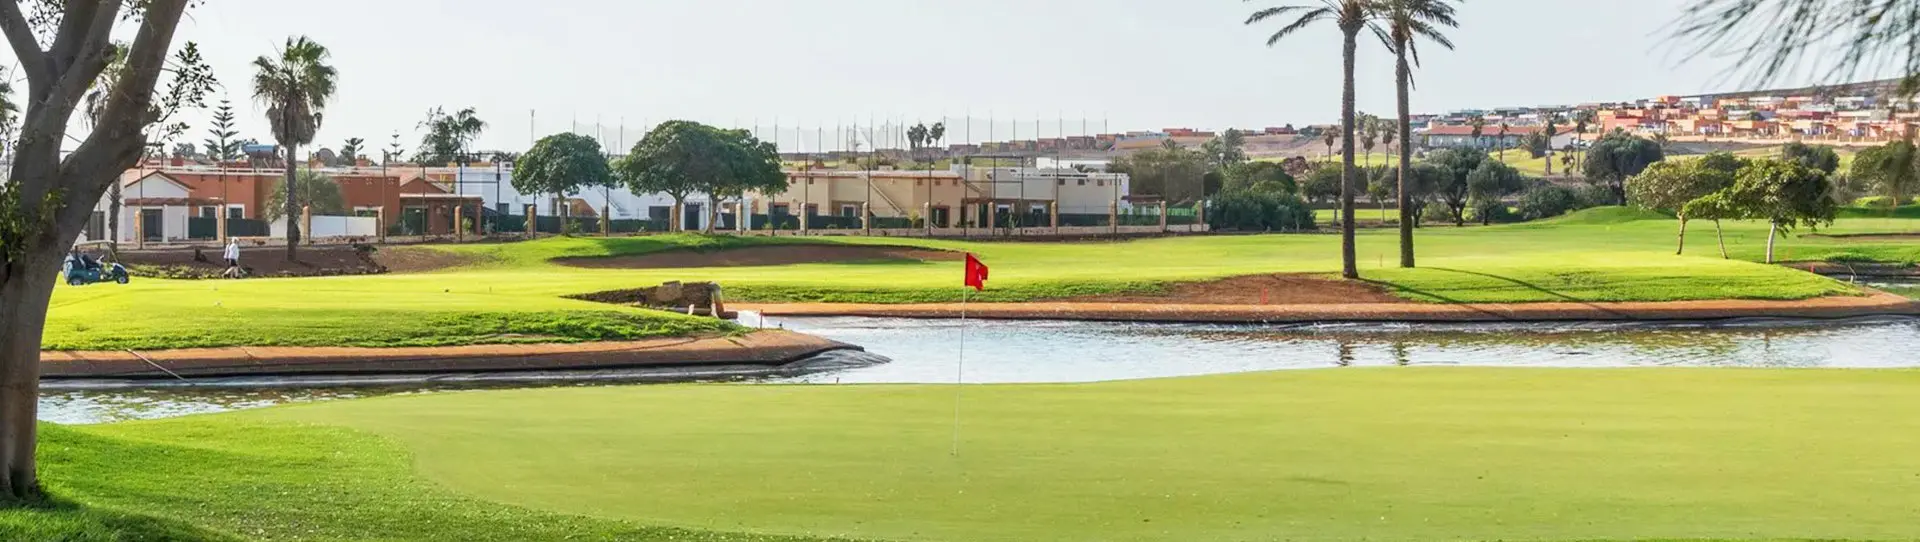 Spain golf courses - Fuerteventura Golf Course - Photo 1